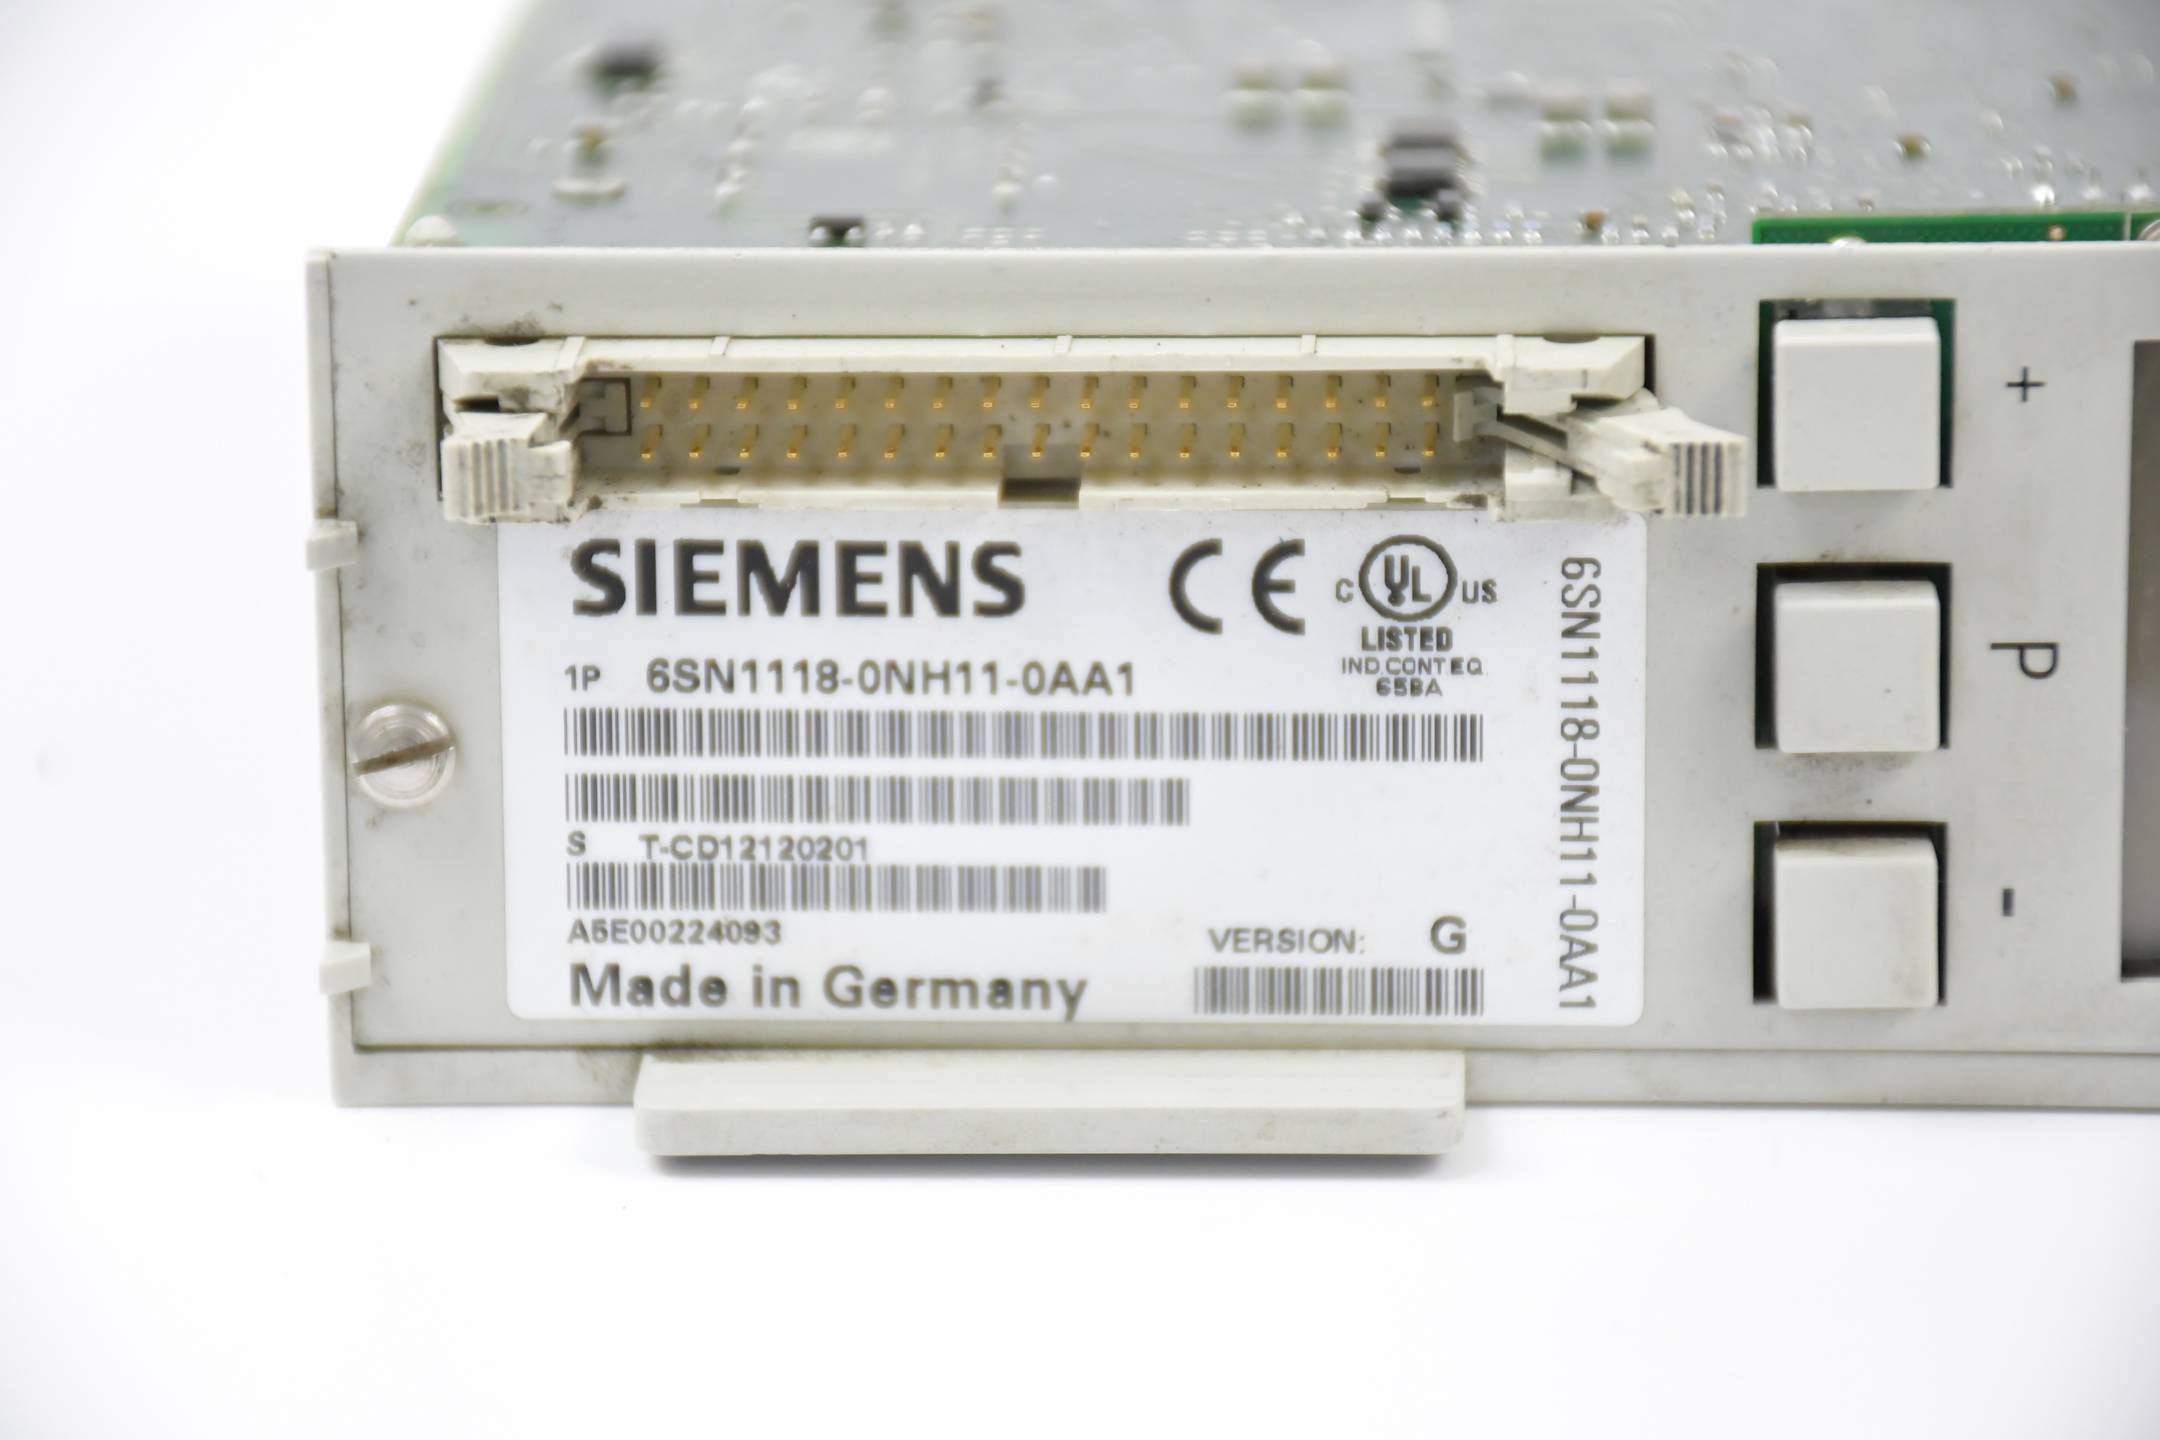 Siemens Simodrive 611 6SN1118-0NH11-0AA1 ( 6SN1 118-0NH11-0AA1 ) Version G